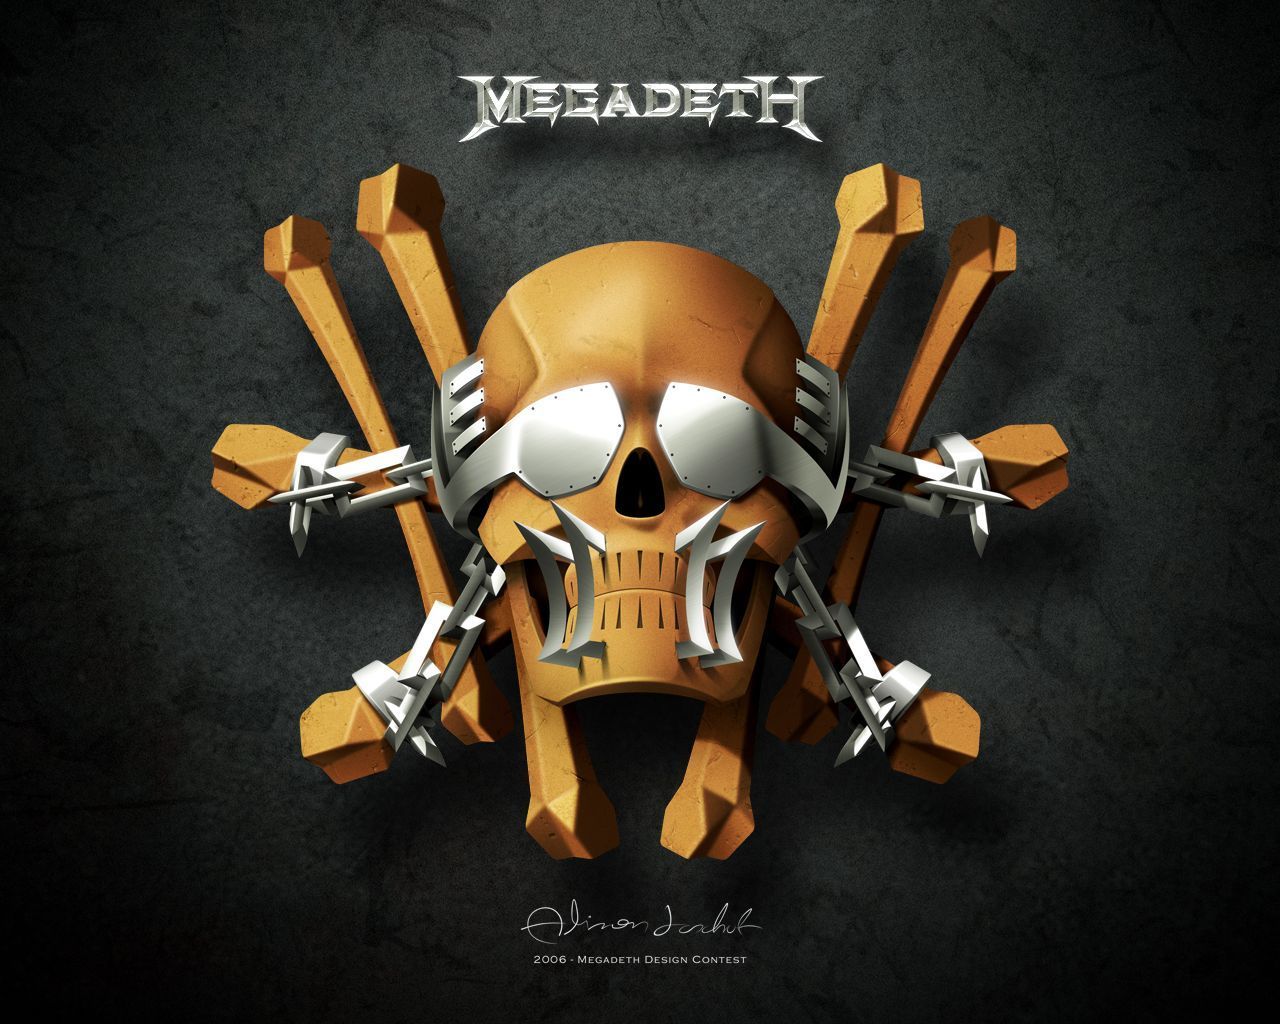 Megadeth Computer Wallpapers, Desktop Backgrounds | 1920x1080 | ID ...